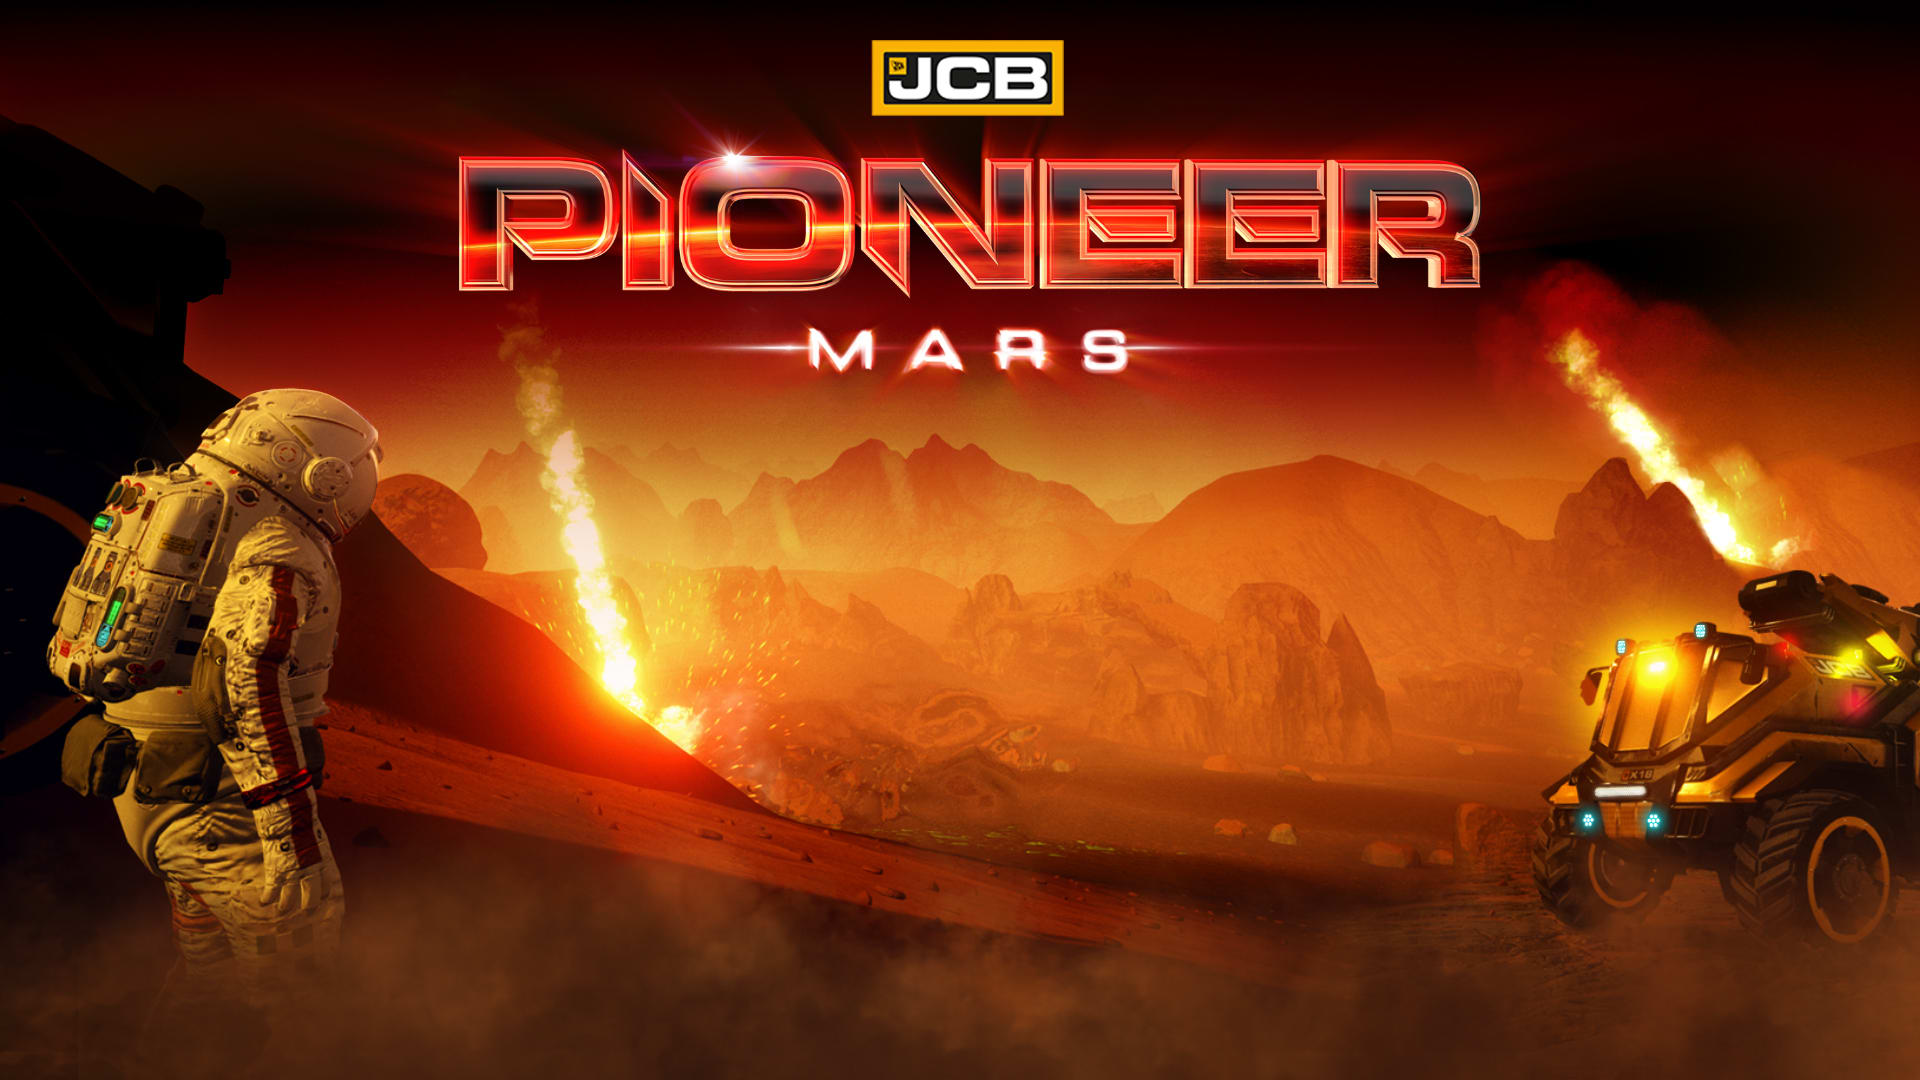 JCB Pioneer: Mars 1